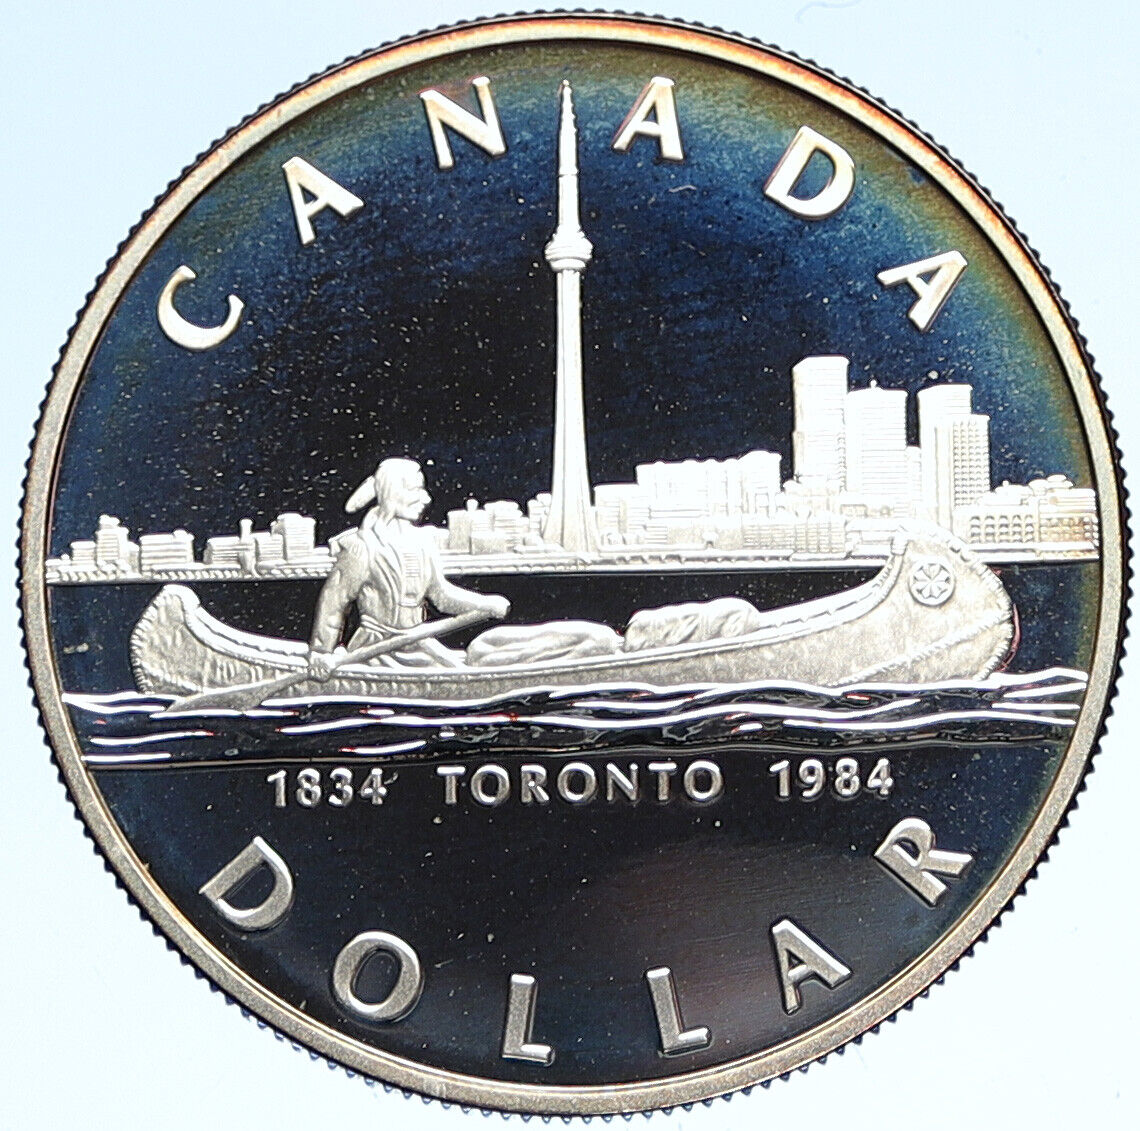 1984 CANADA UK Elizabeth II Canoe in Toronto OLD 150Y Proof Silver Coin i112676